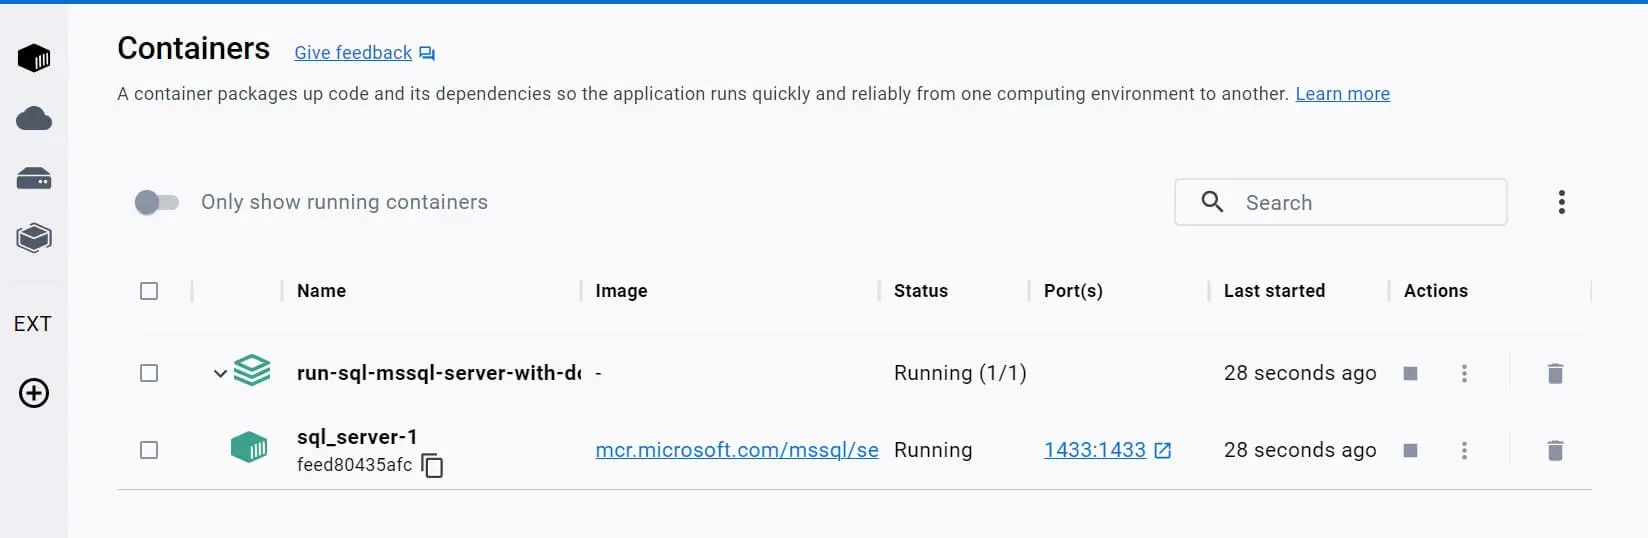 How to Run Microsoft SQL Server|MSSQL in Docker on Windows